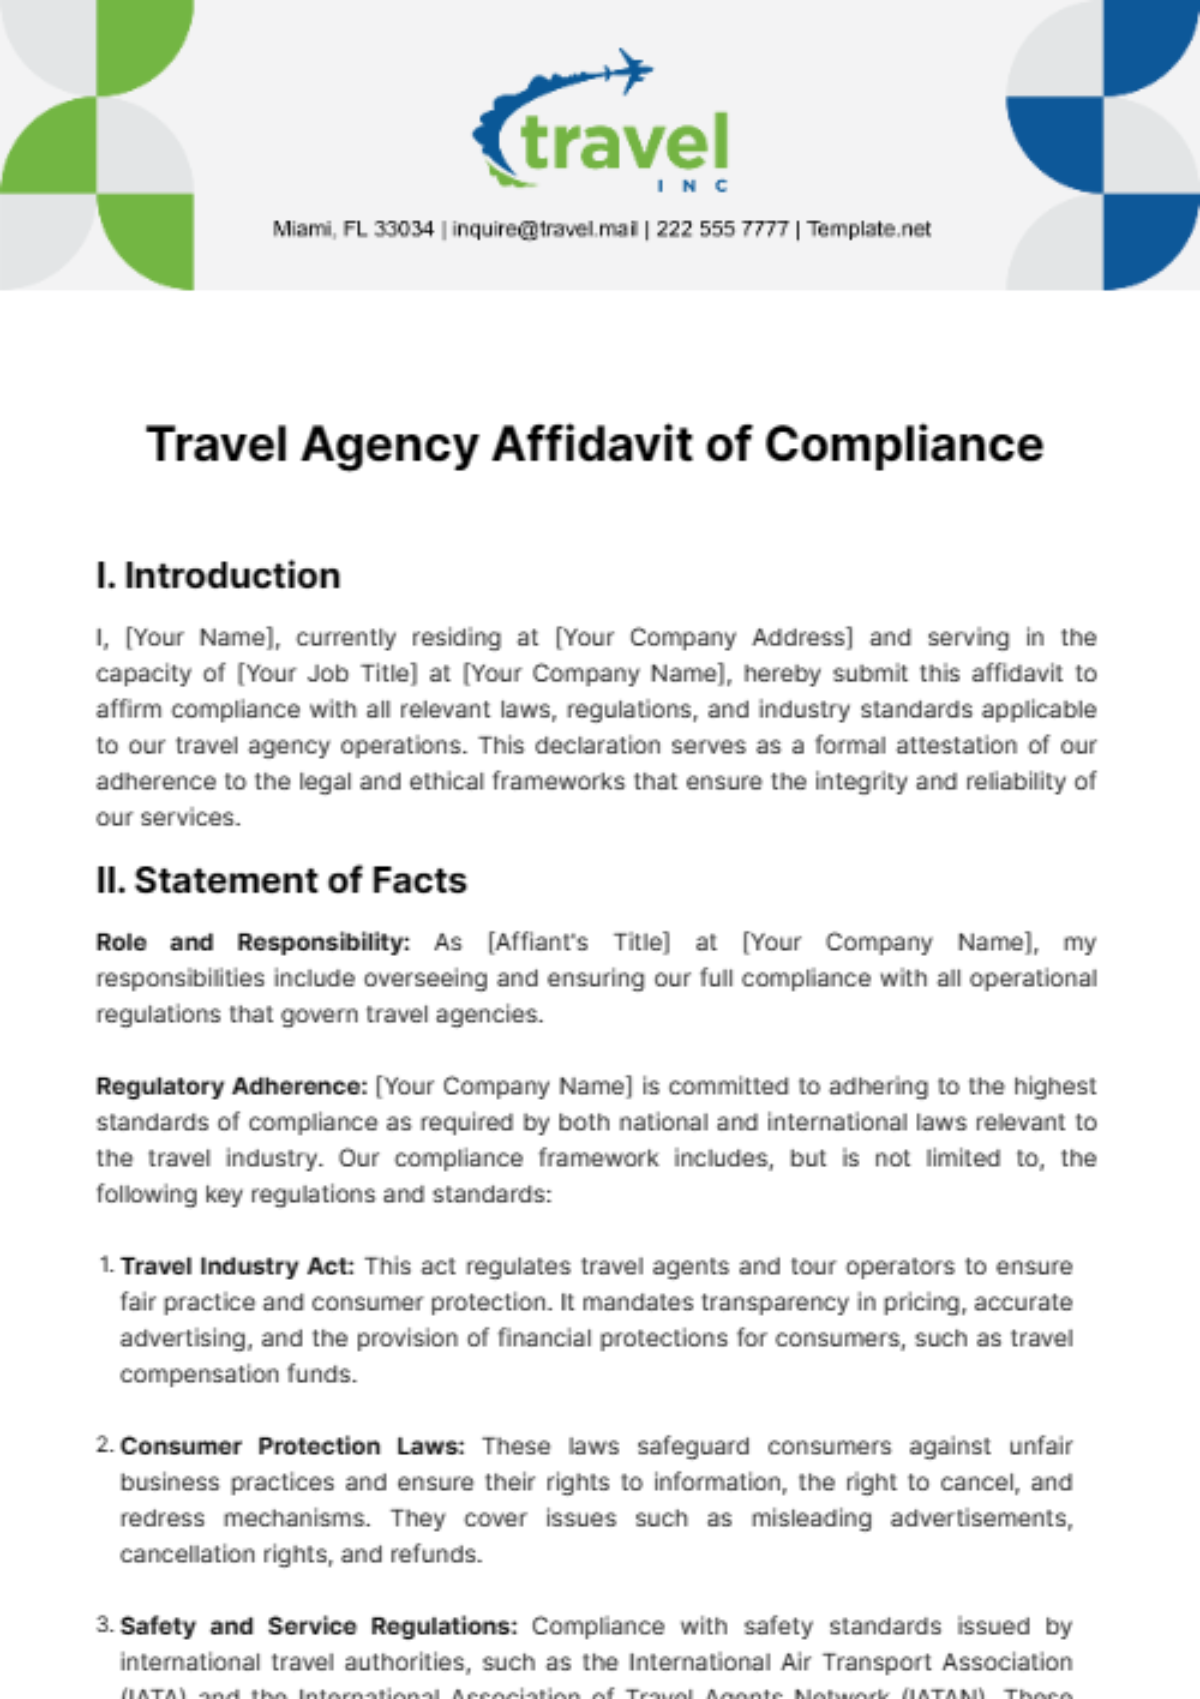 Travel Agency Affidavit of Compliance Template